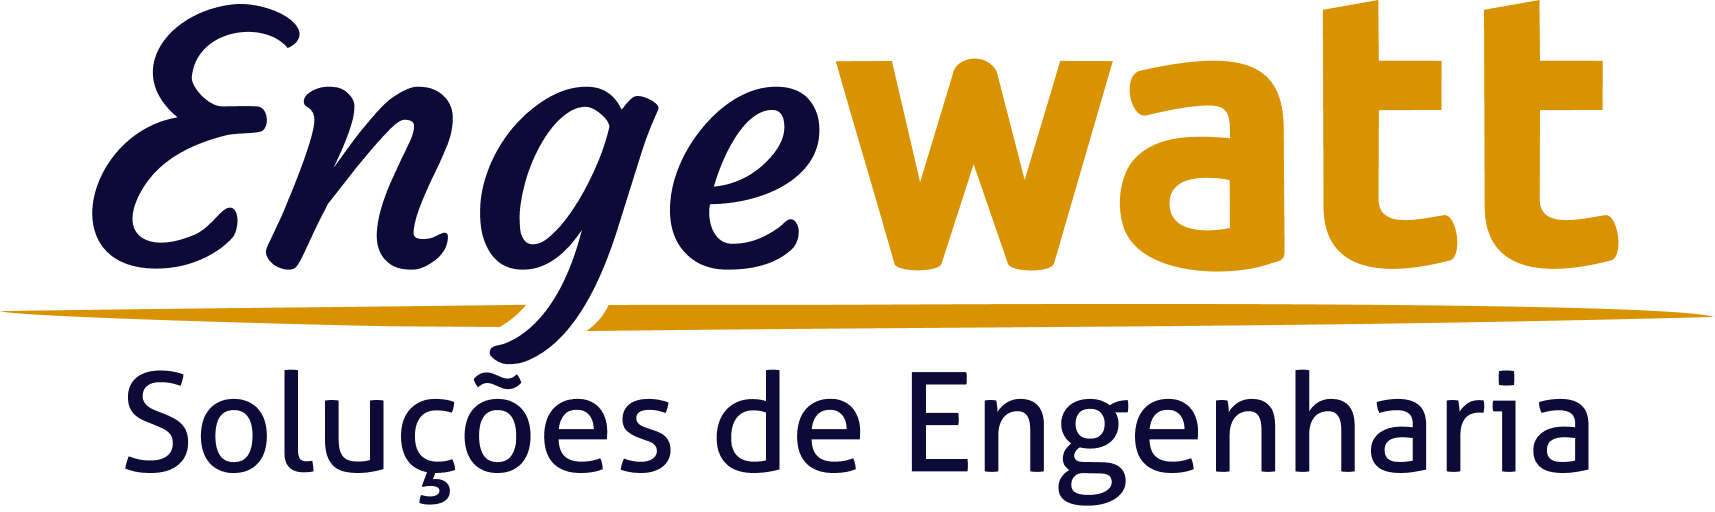 Engewatt logo